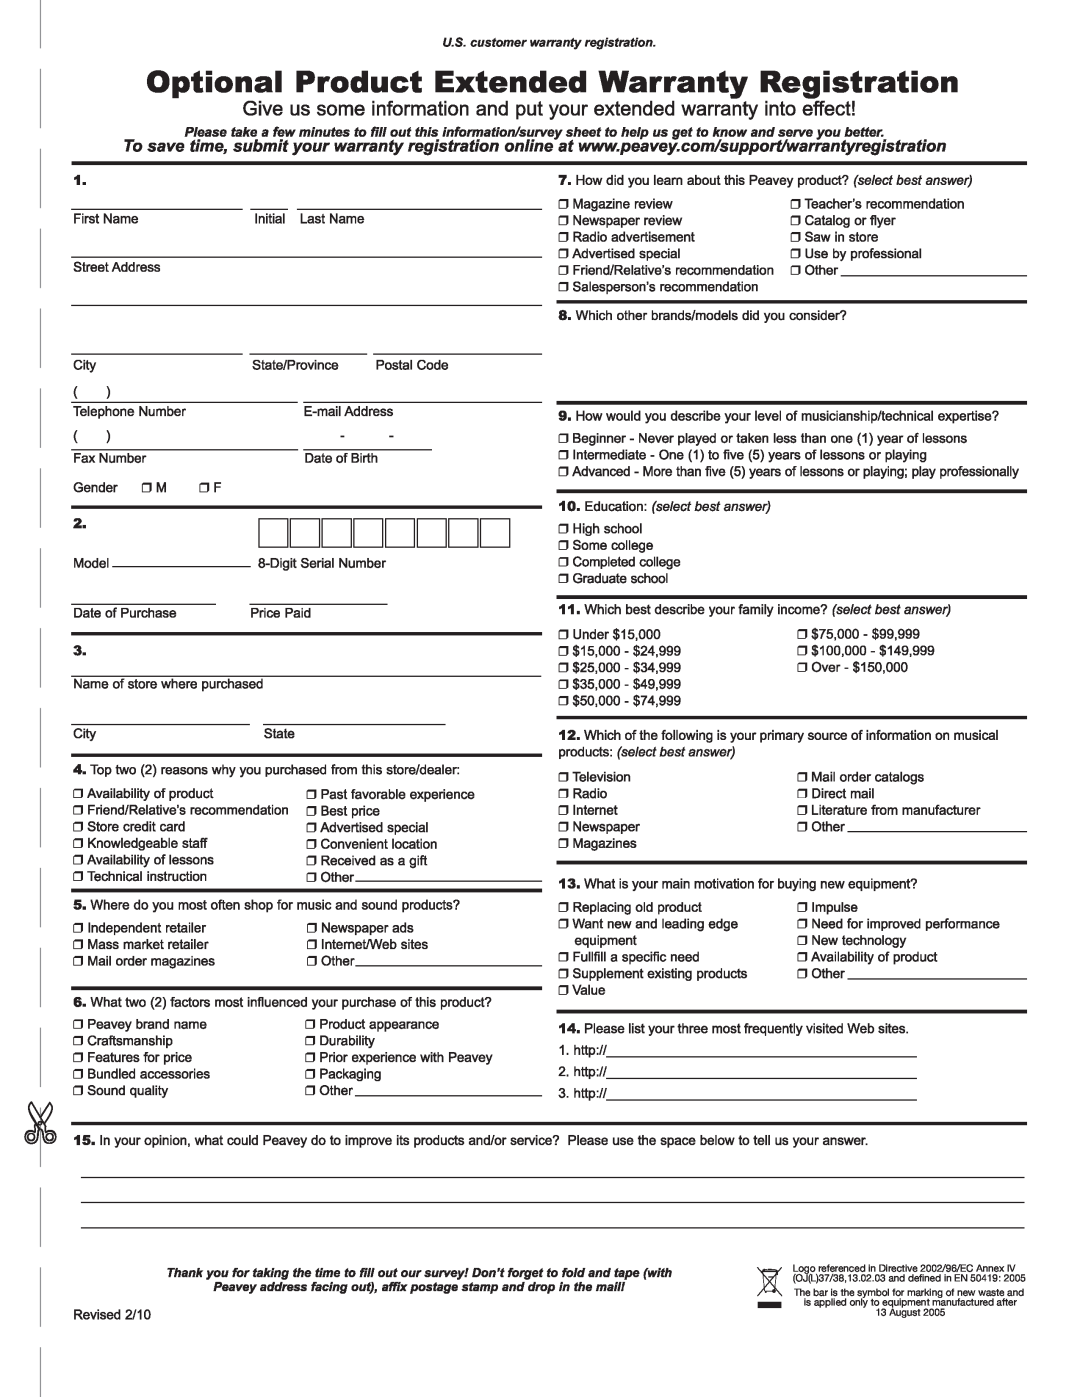 Peavey 6534 manual U.S. customer warranty registration 